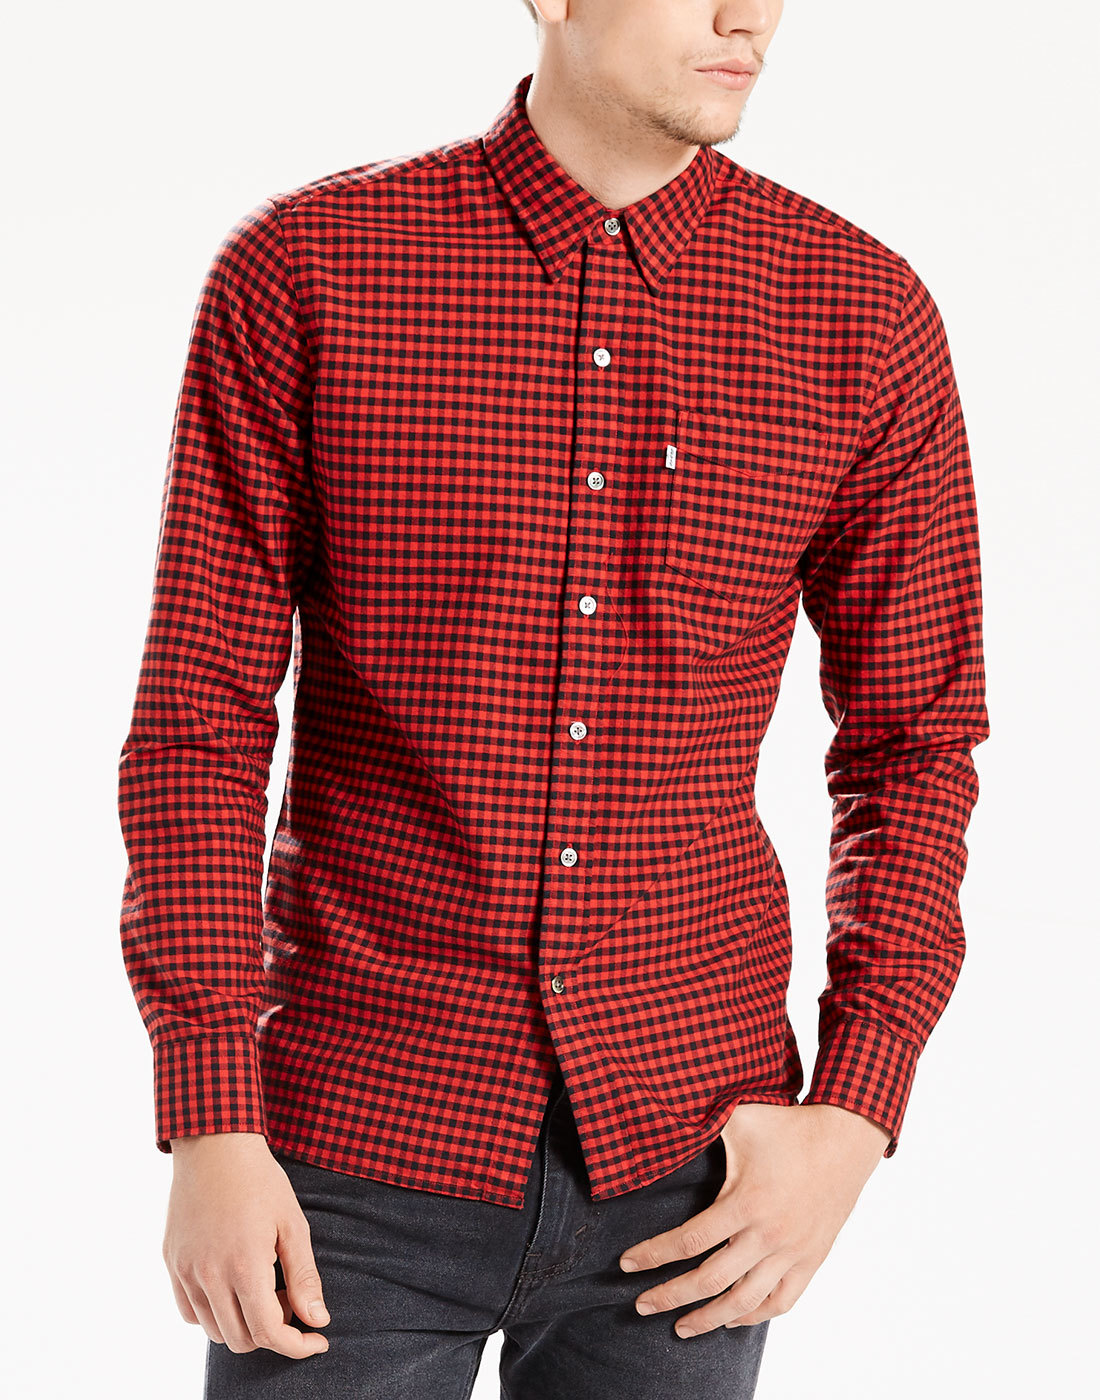 LEVI'S® Men's Retro Mod Sunset 1 Pocket Check Shirt in Cherry Red